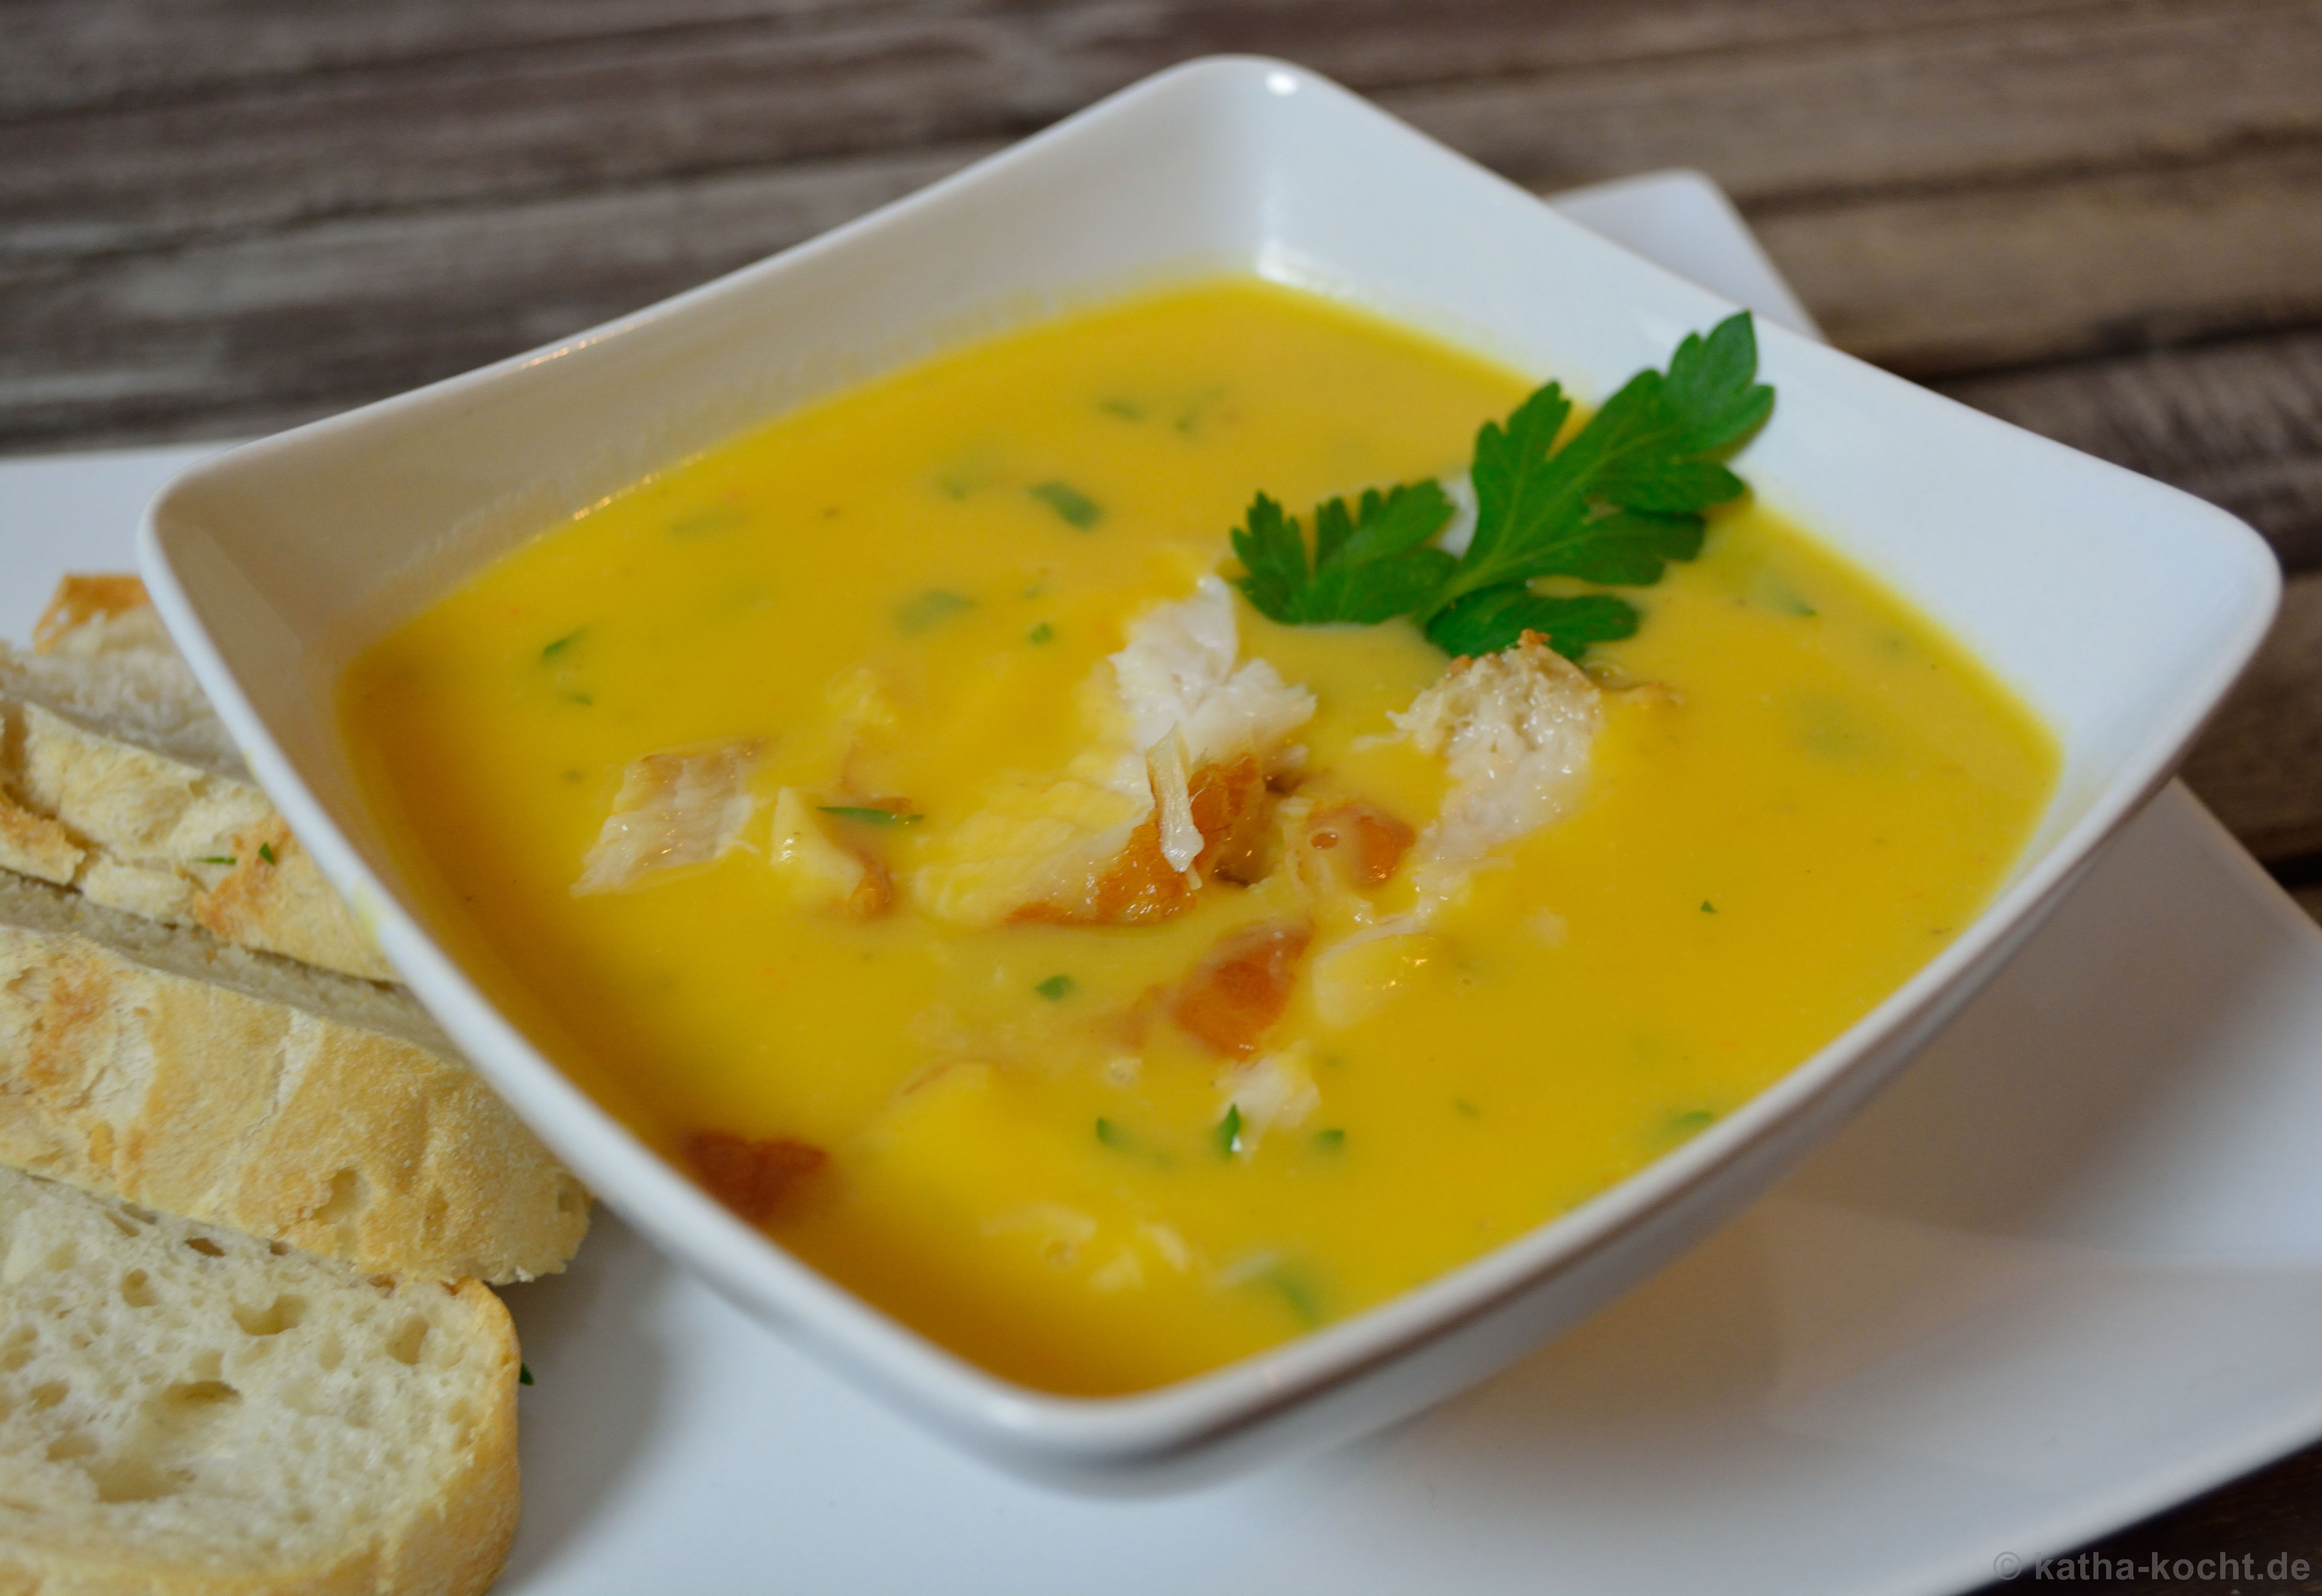 Butternut-Kürbis Suppe mit Räuchermakrele - Katha-kocht!